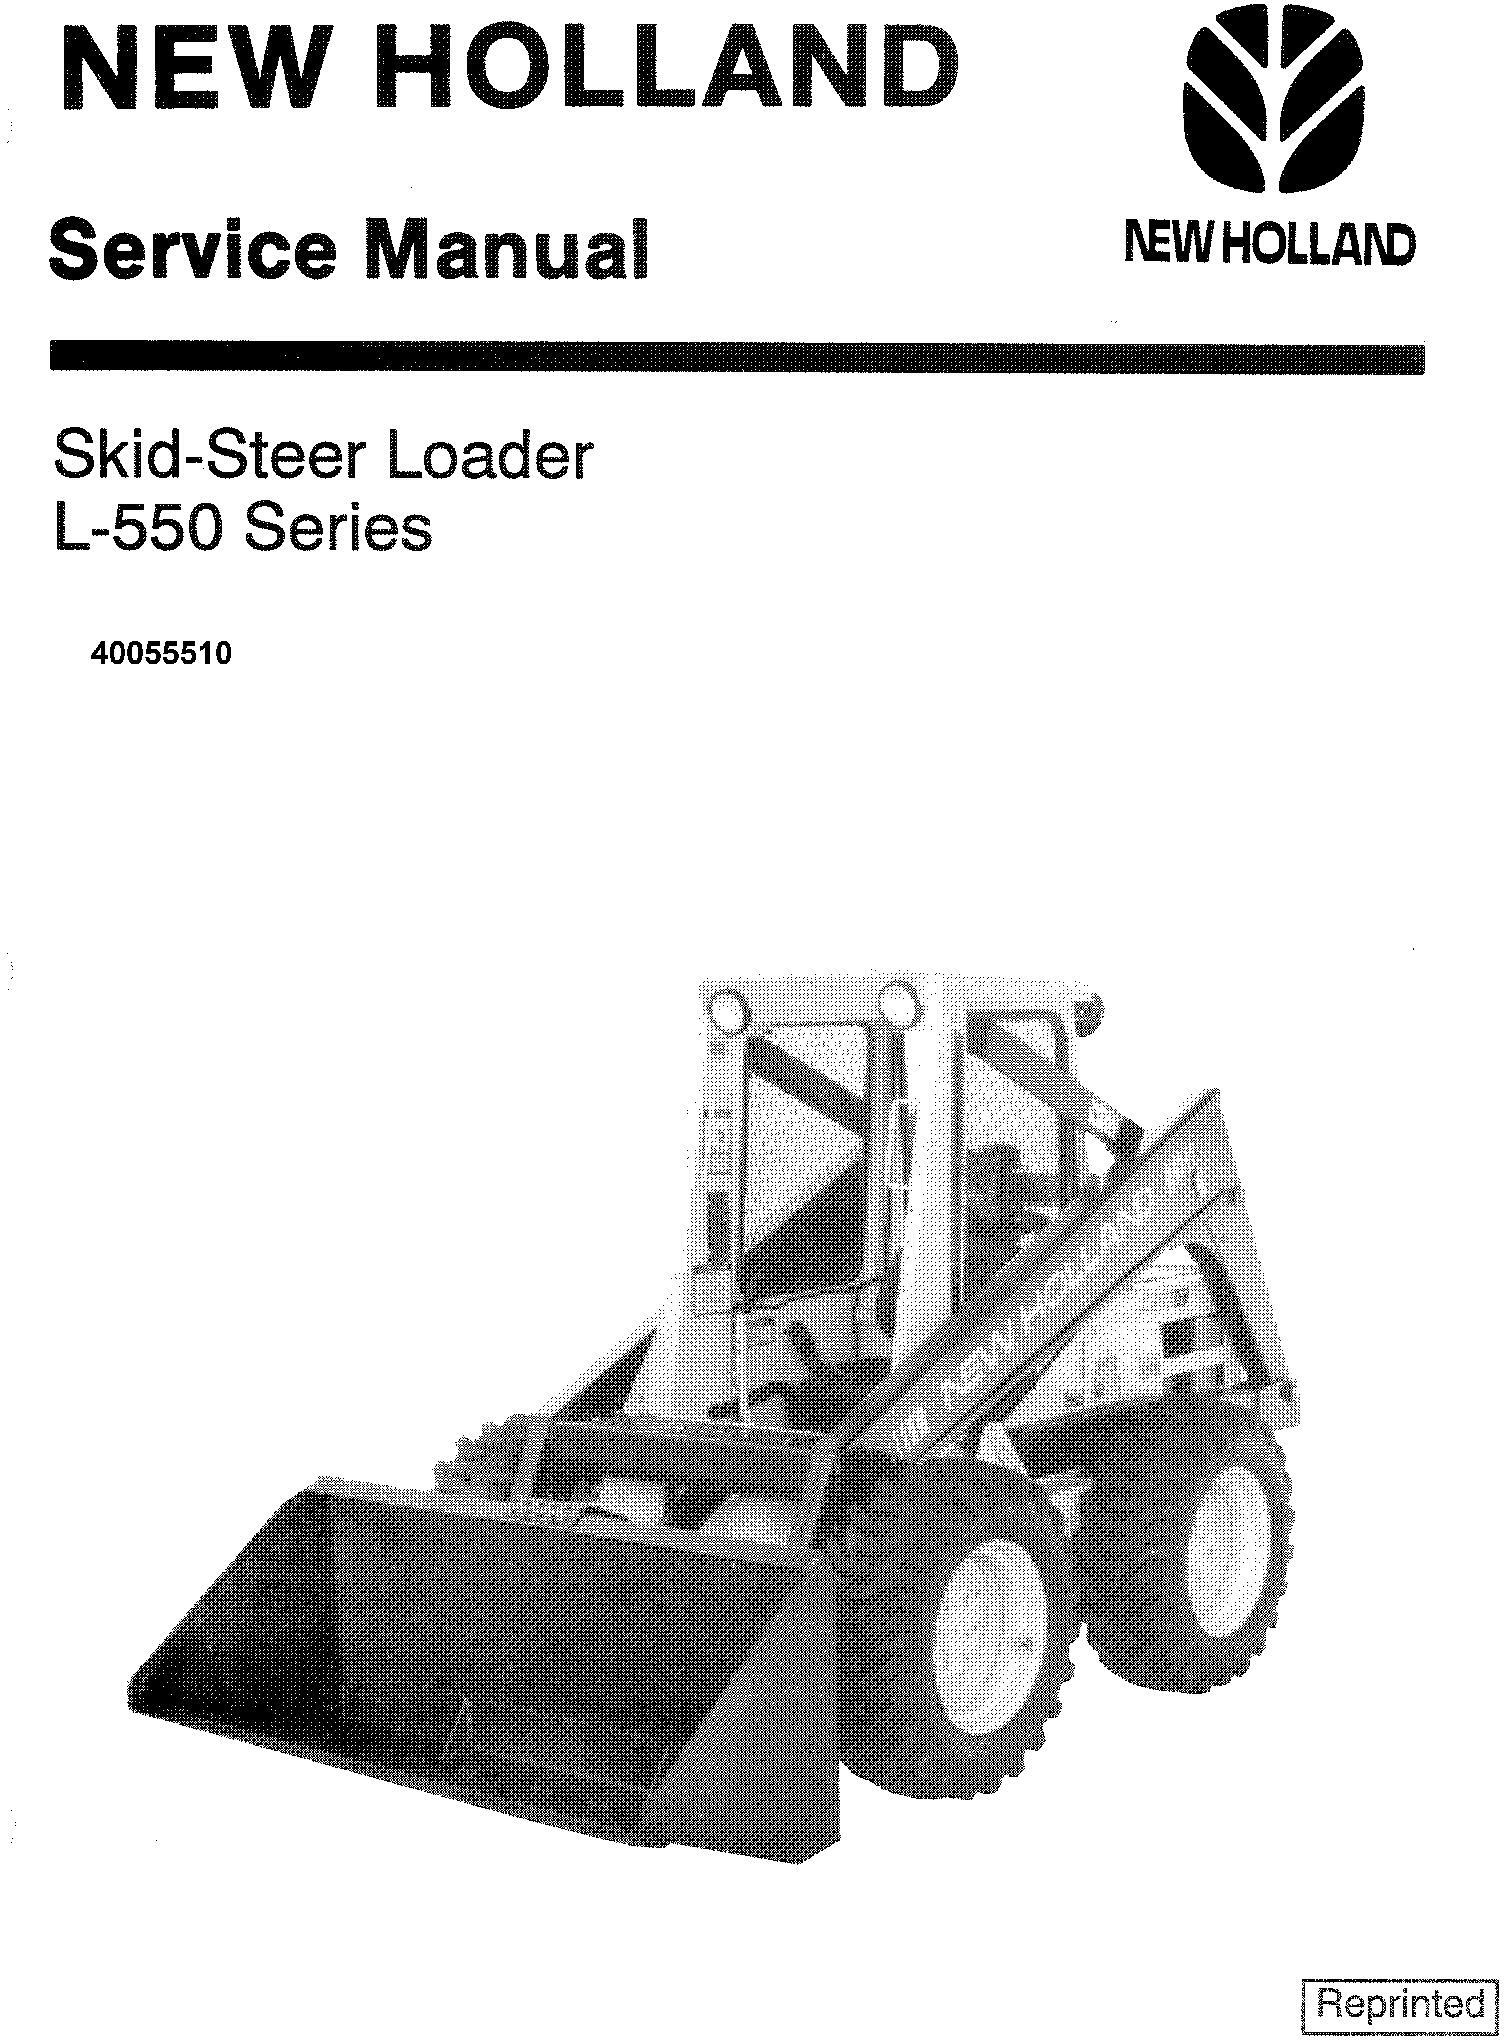 New Holland L553 Skid Steer Service Manual 